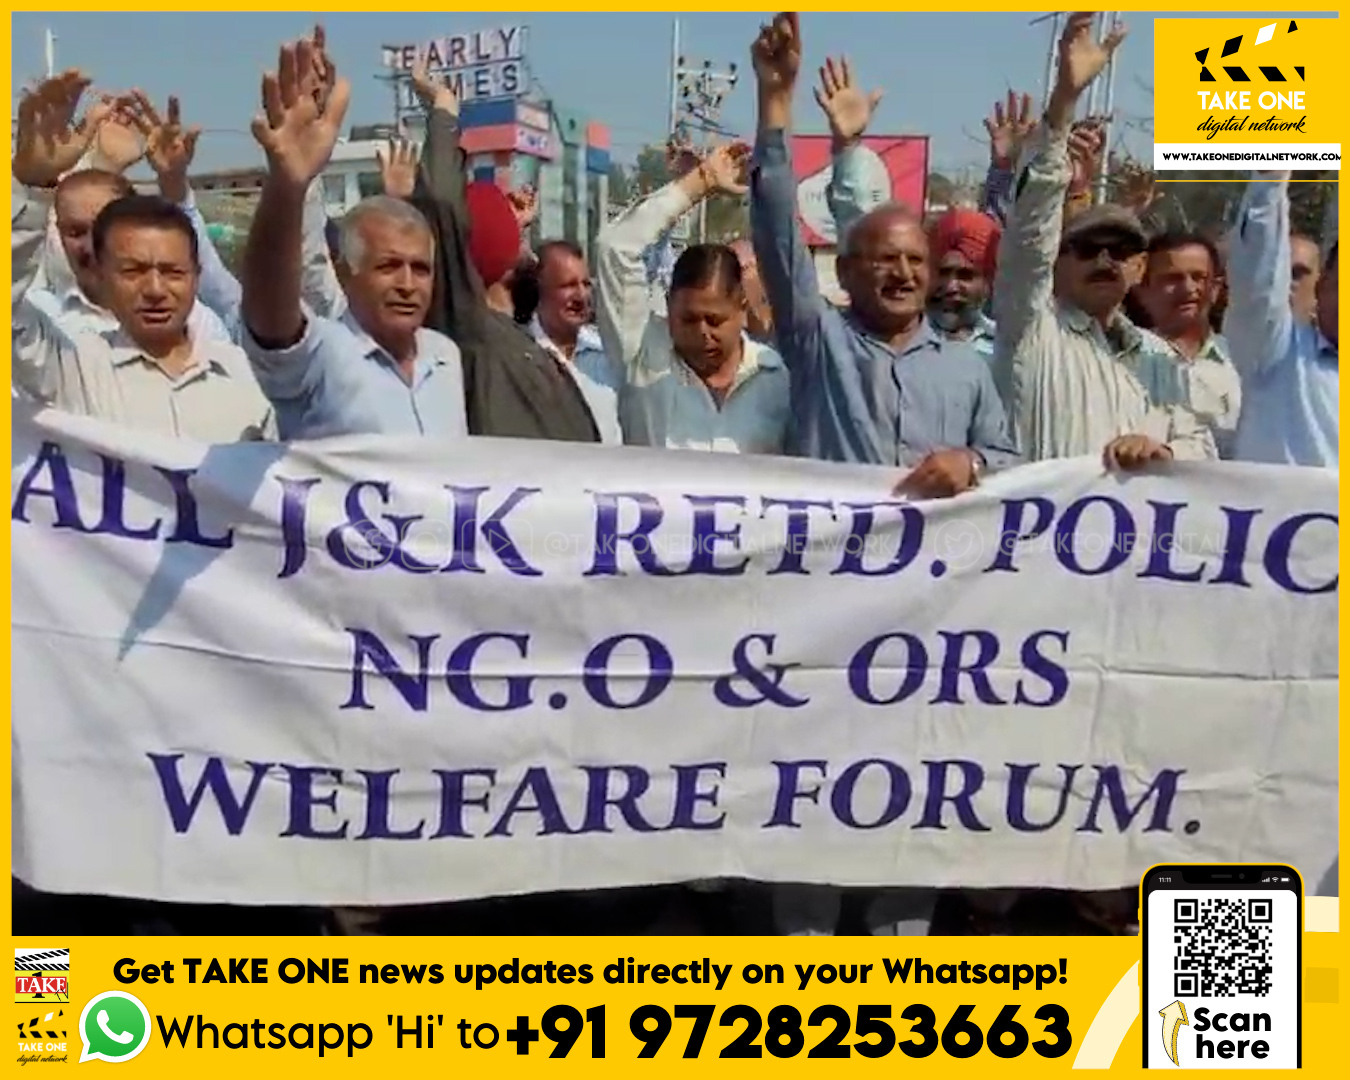 All J&K Retired Police NGO & ORS Welfare Forum highlights…